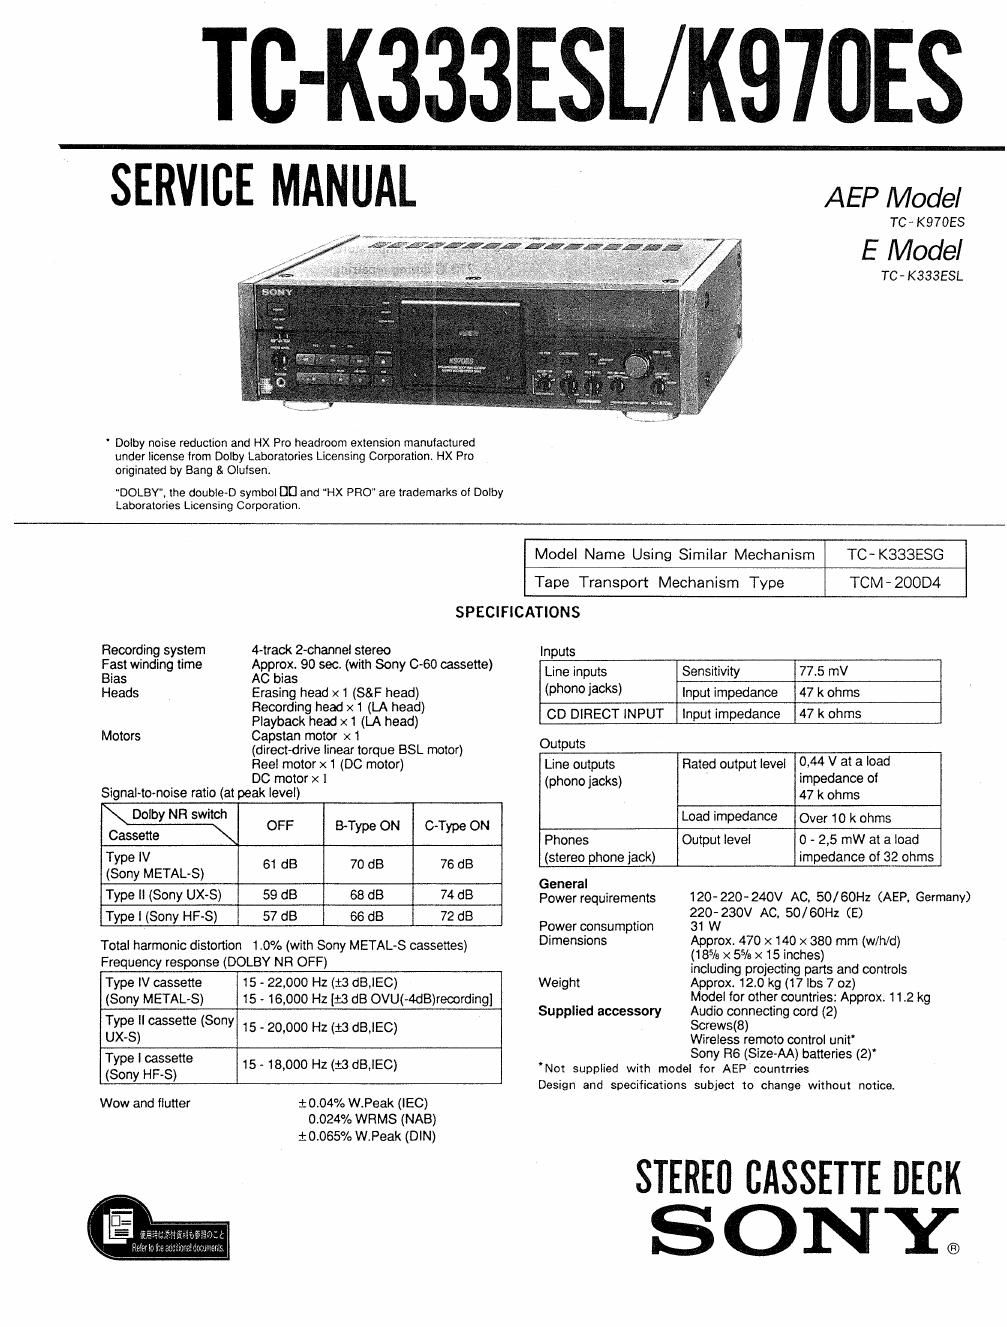 sony tc k 970 es service manual